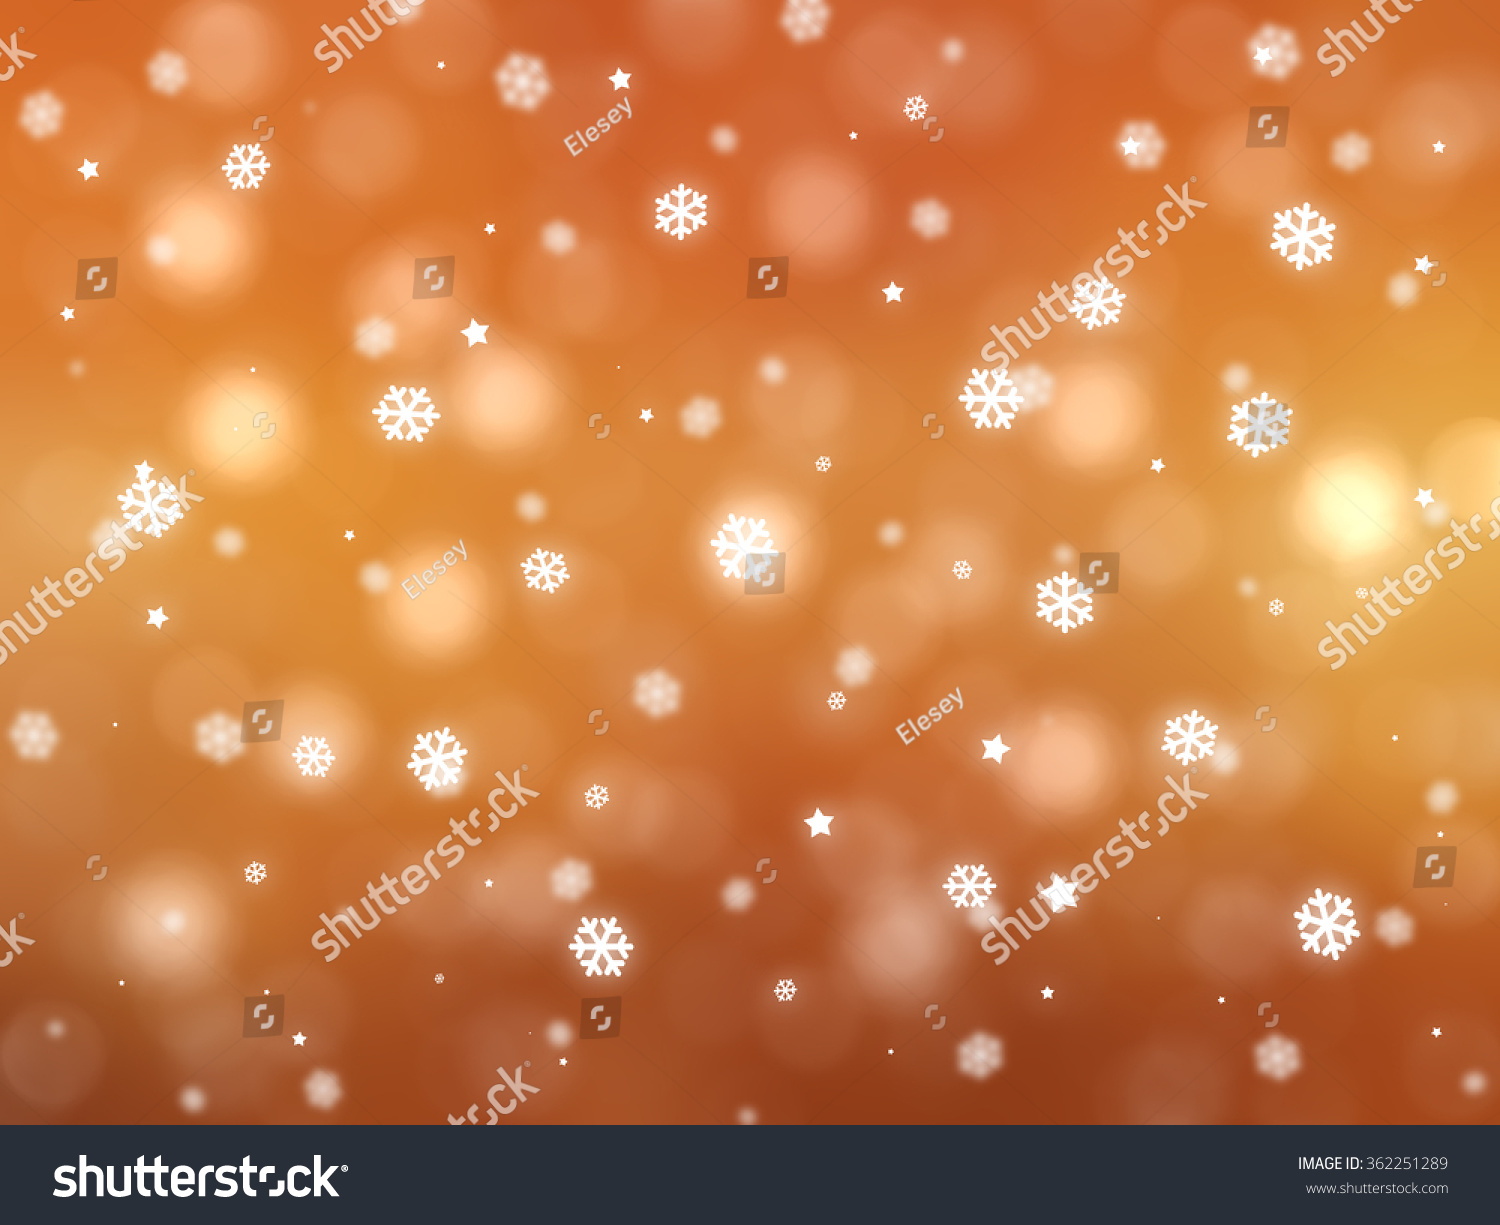 Christmas orange background. The winter background, falling snowflakes #362251289